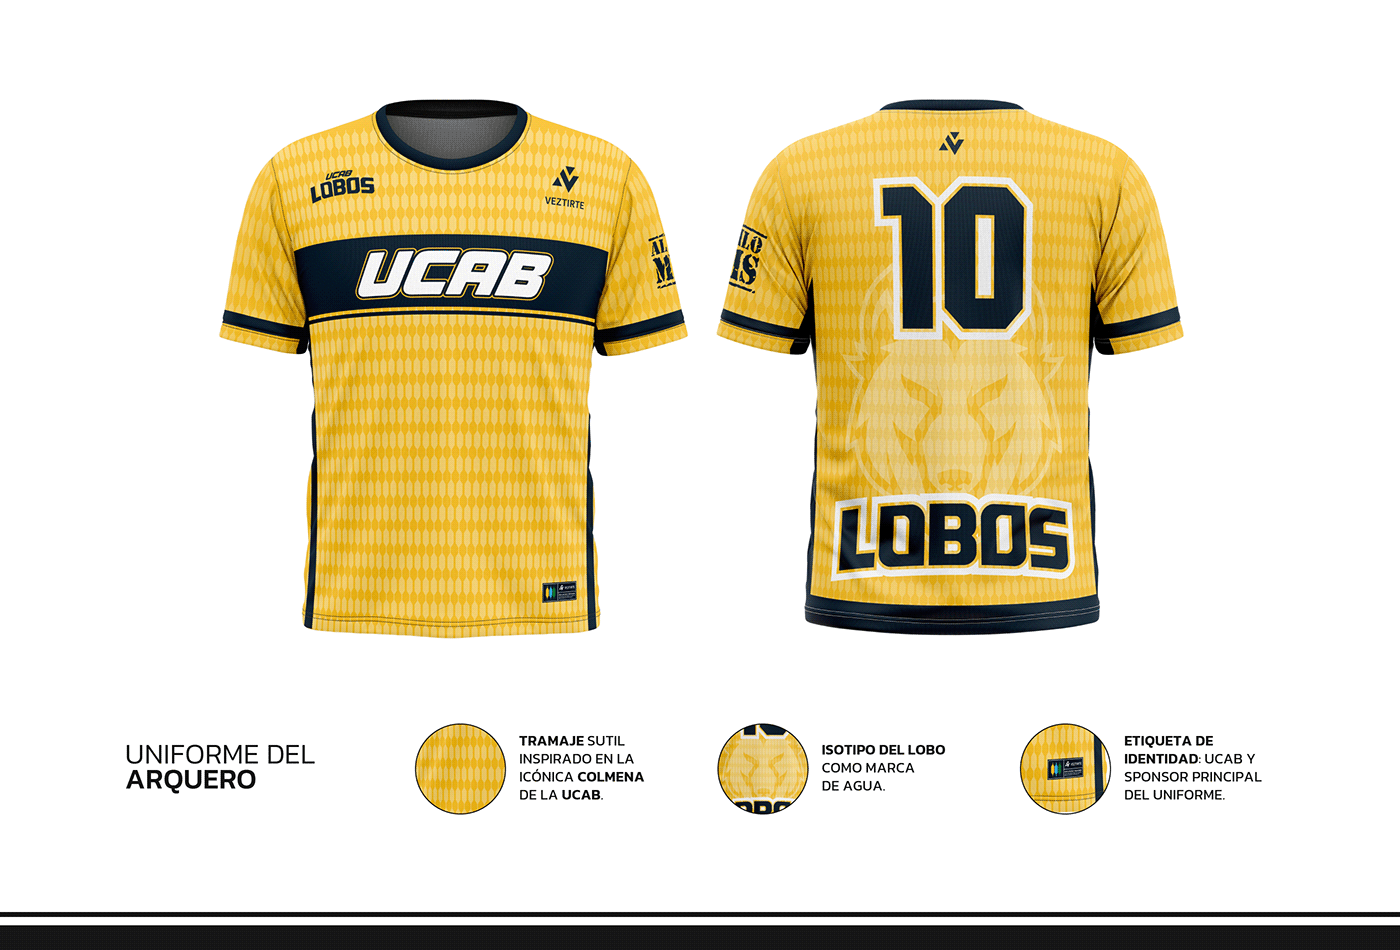 apparel Clothing football jersey soccer sport UCAB uniform University venezuela